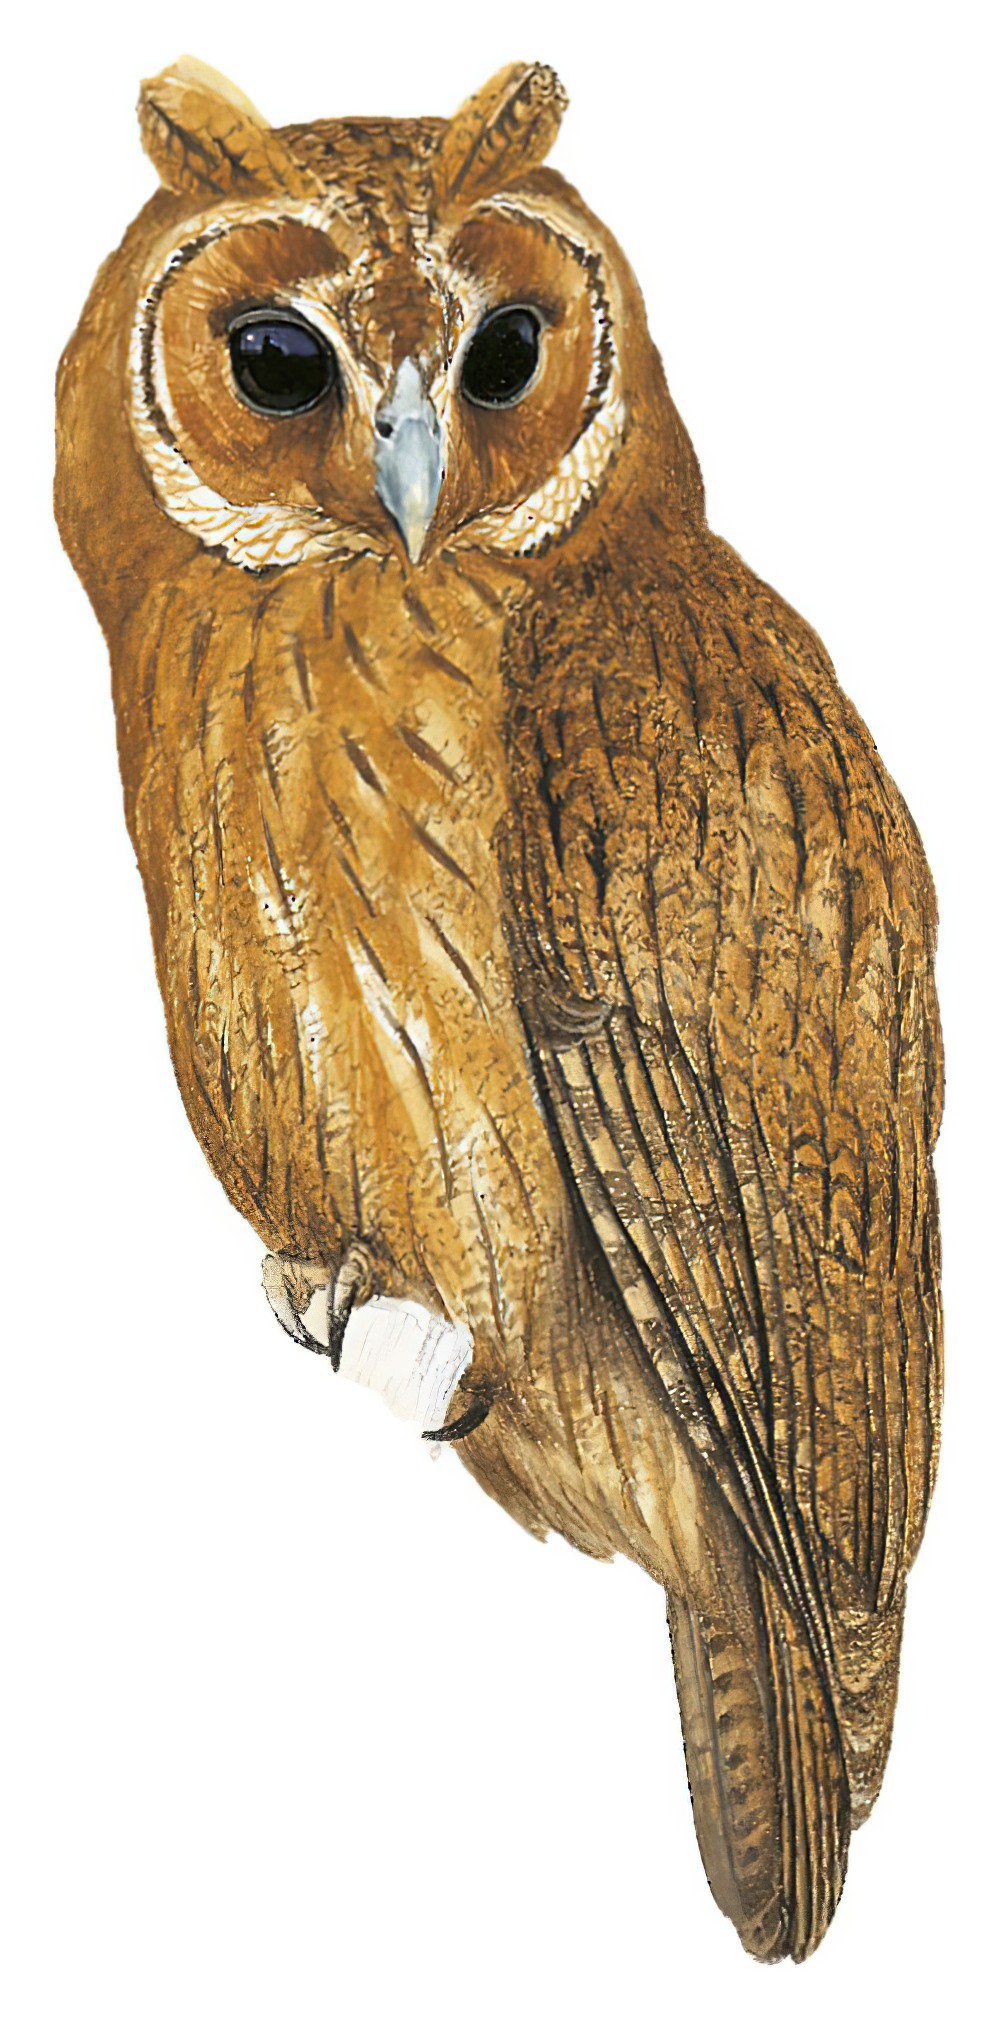 Jamaican Owl / Pseudoscops grammicus